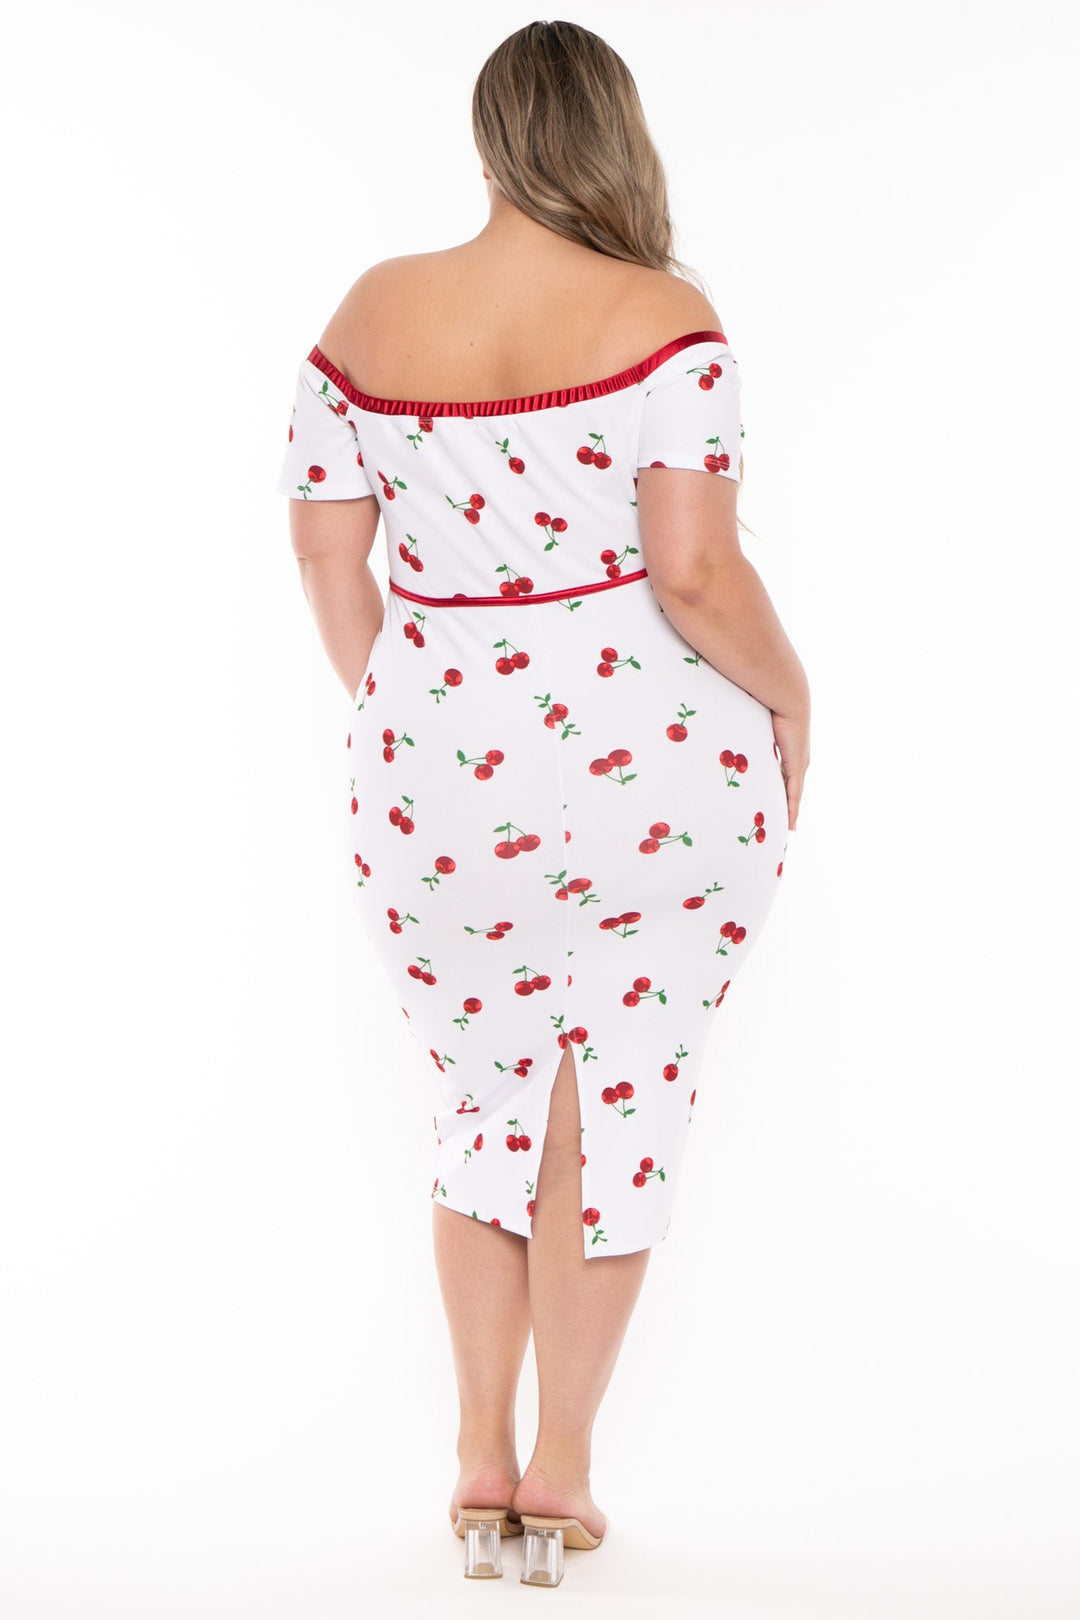 Curvy Sense Dresses Plus Size Delaide Cherry Midi Dress- White